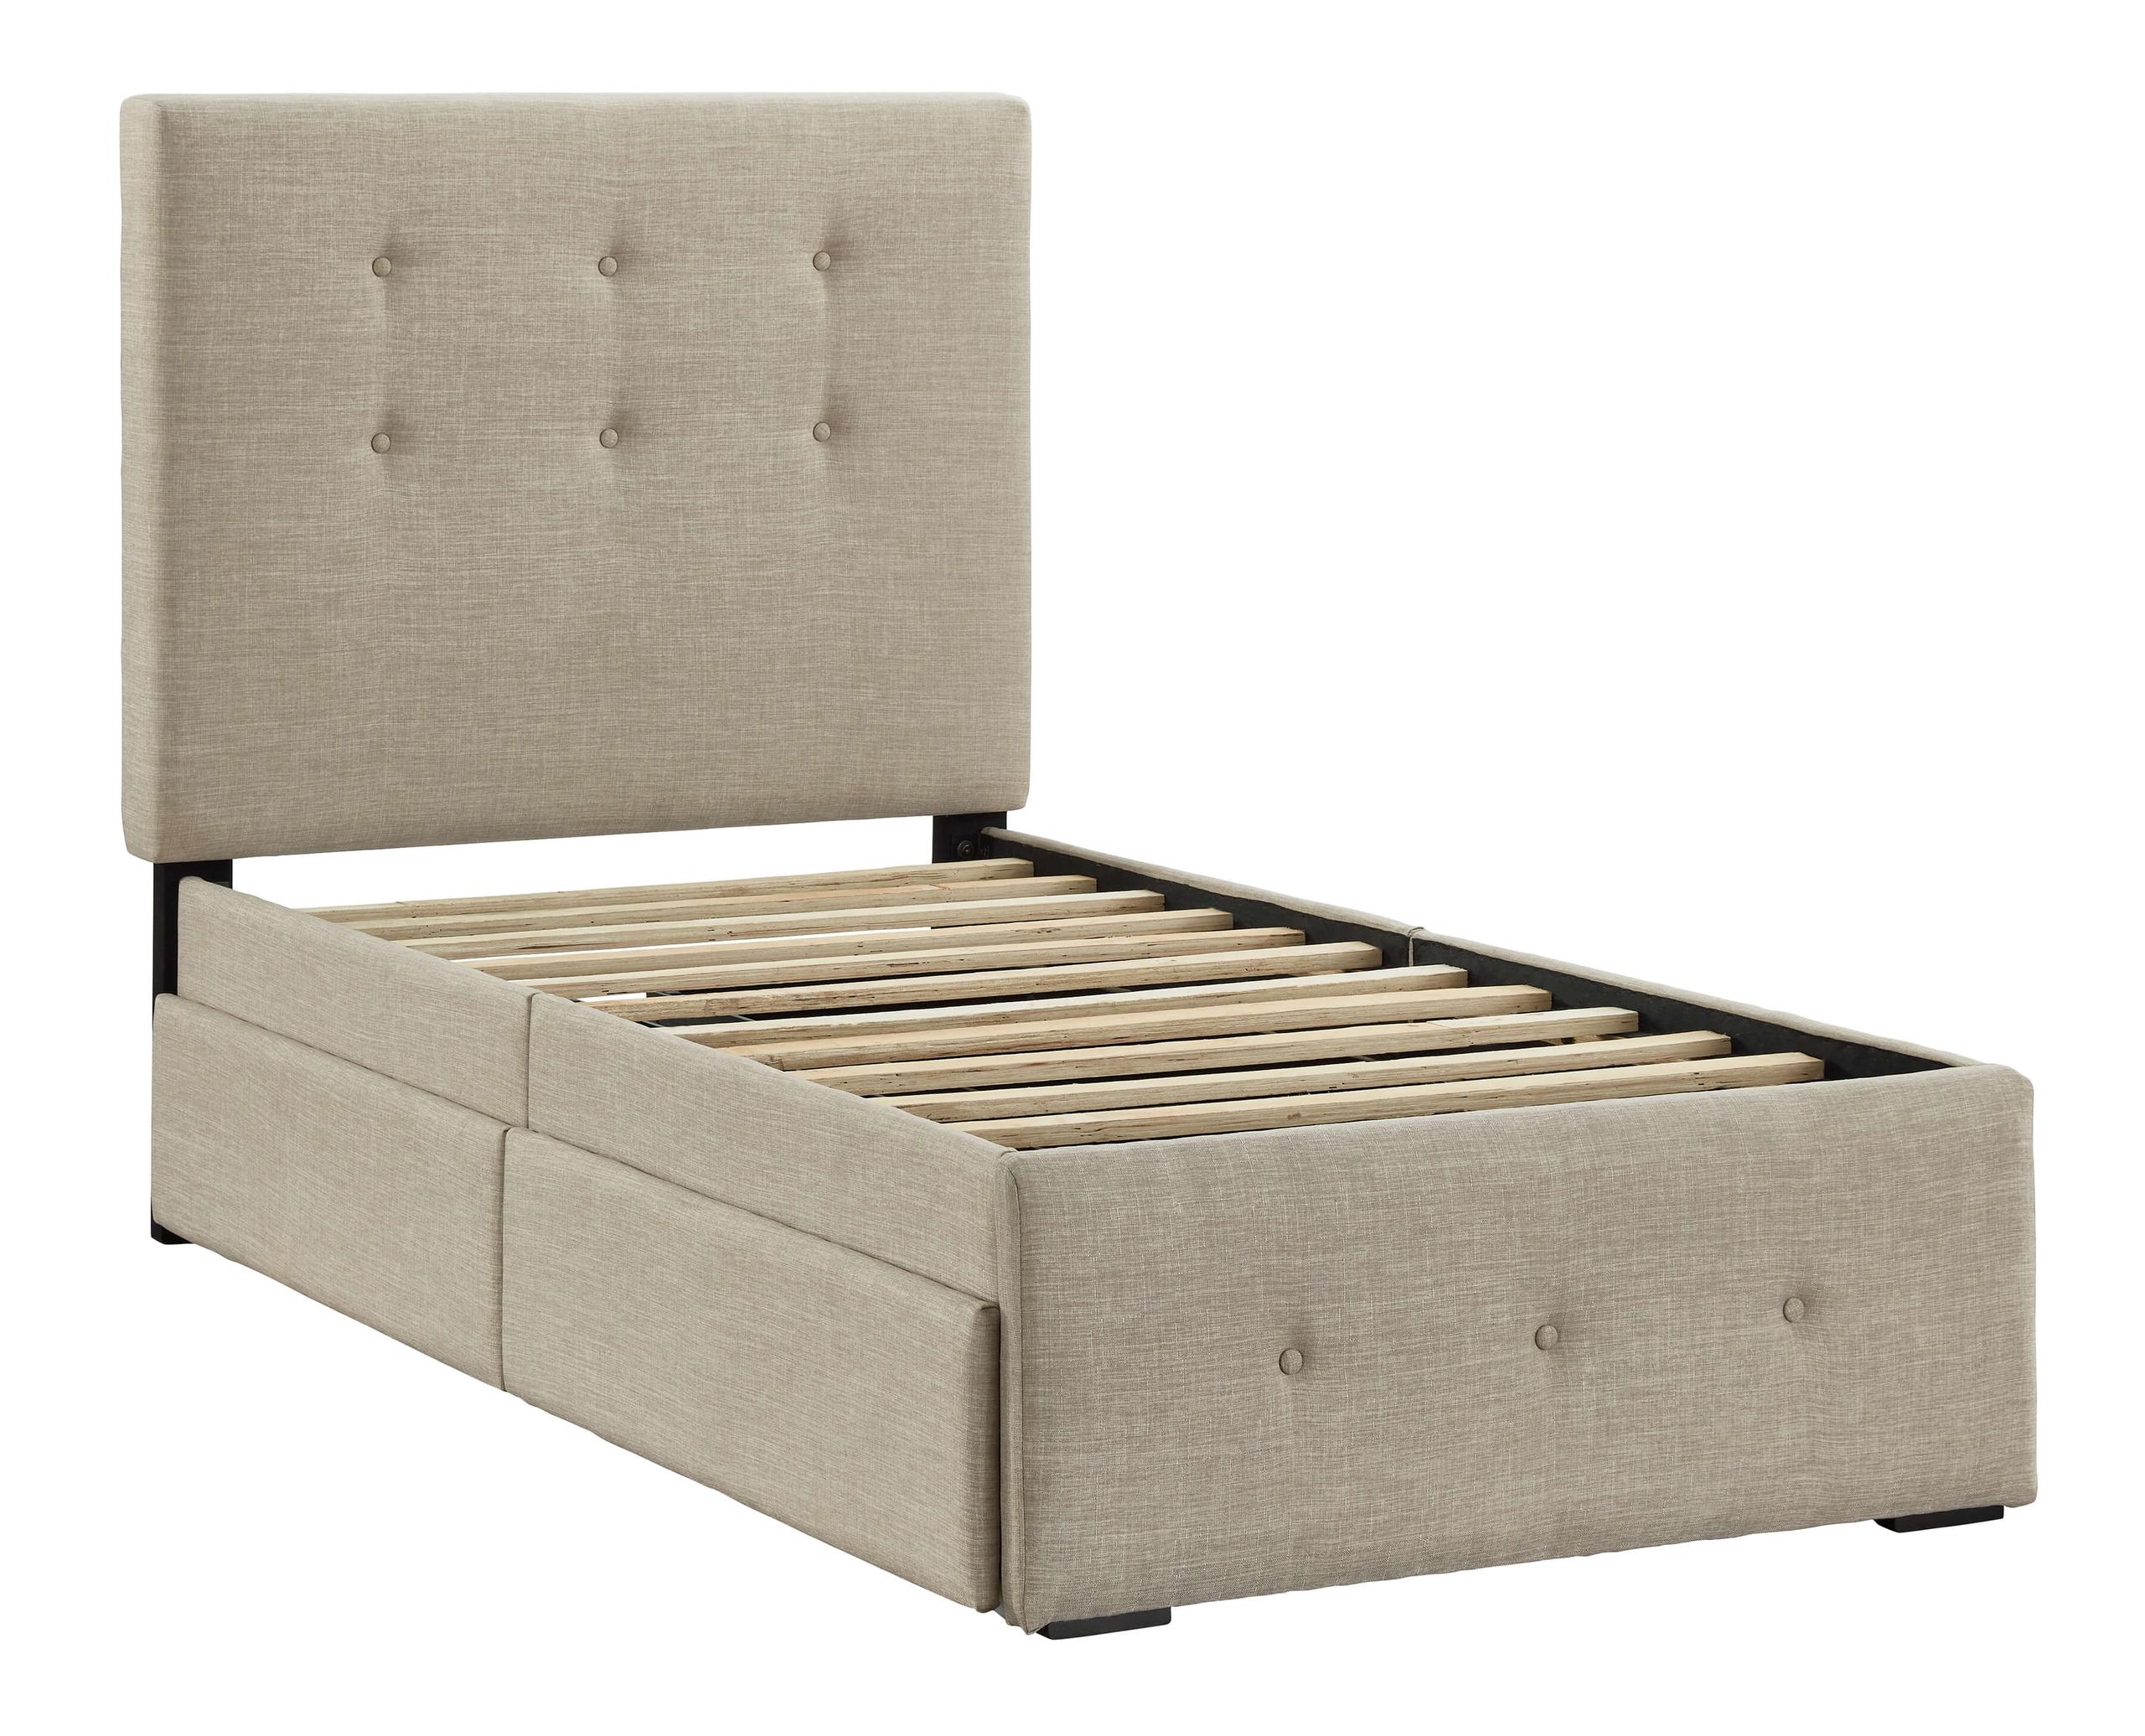 ASHLEY FURNITURE B092B2 Gladdinson Twin Upholstered Storage Bed